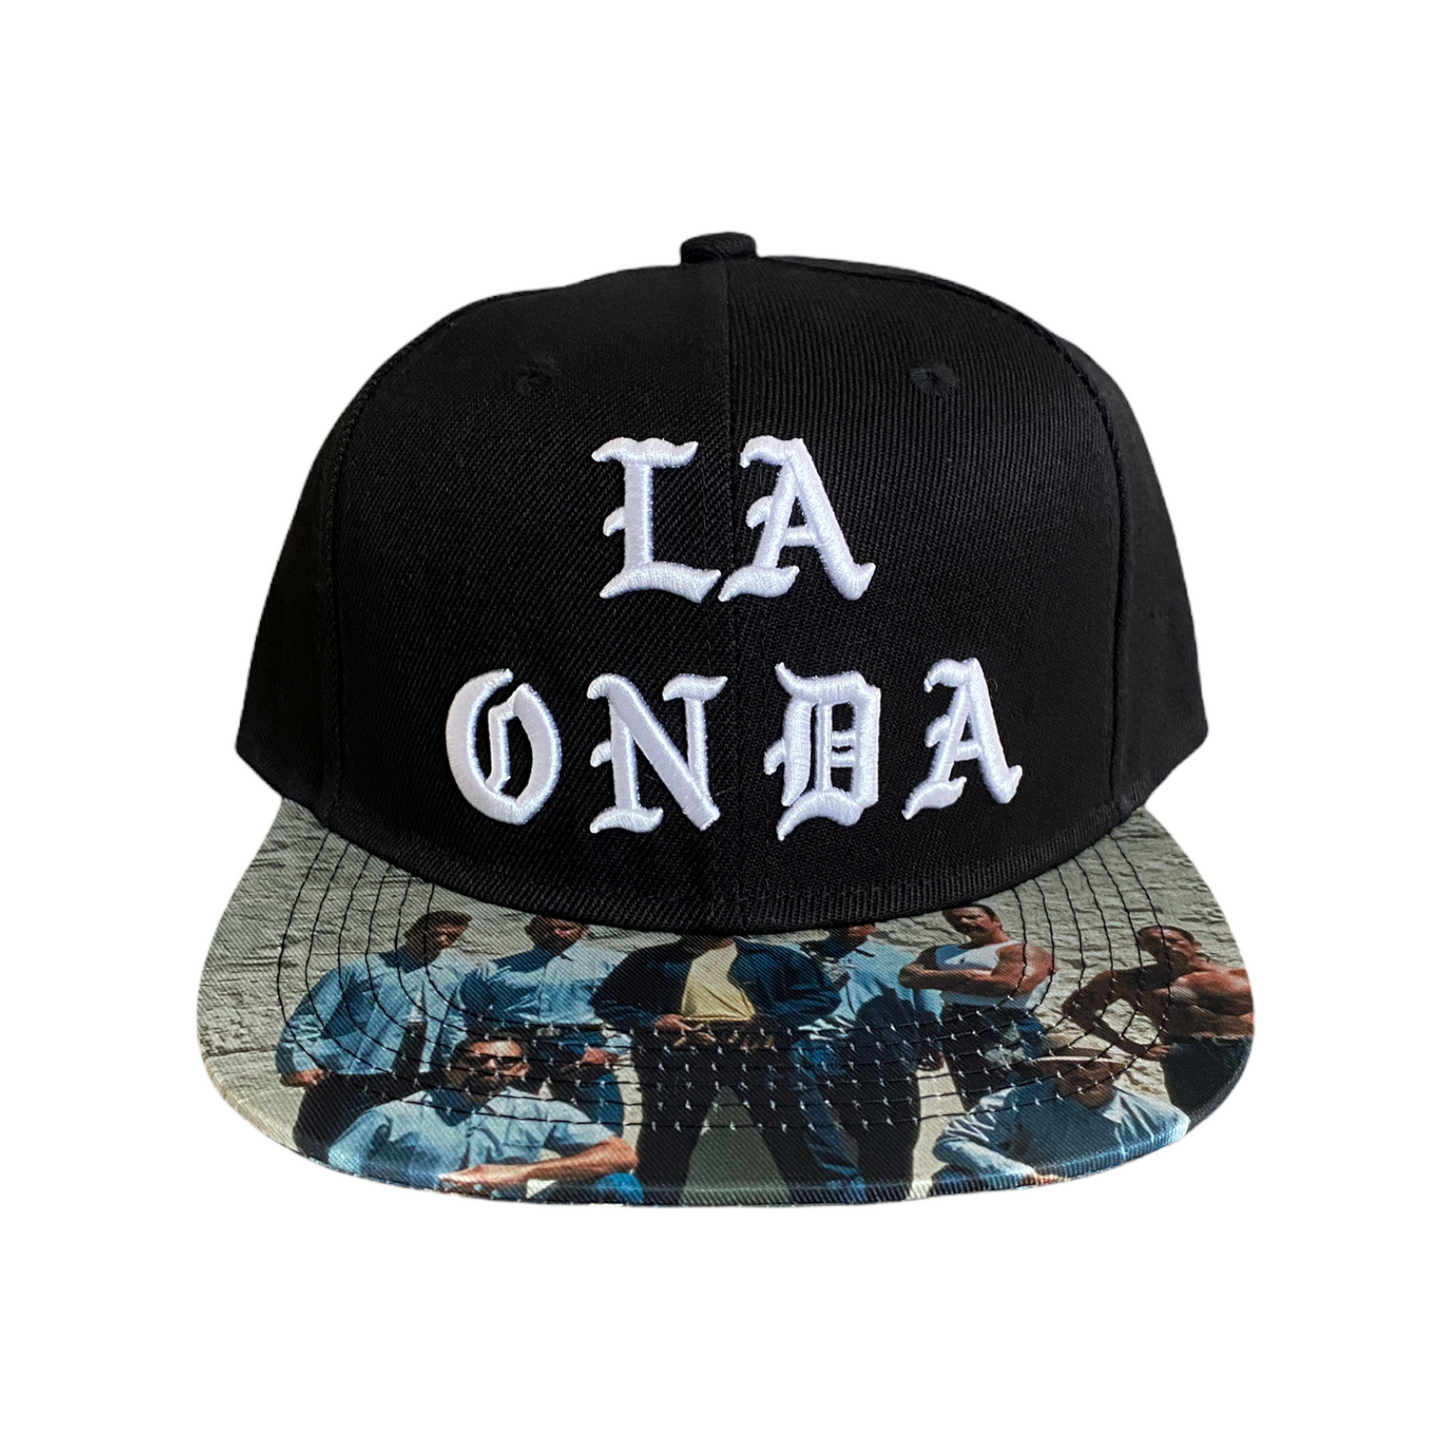 La Onda SnapBack Hat *LIMITED EDITION*